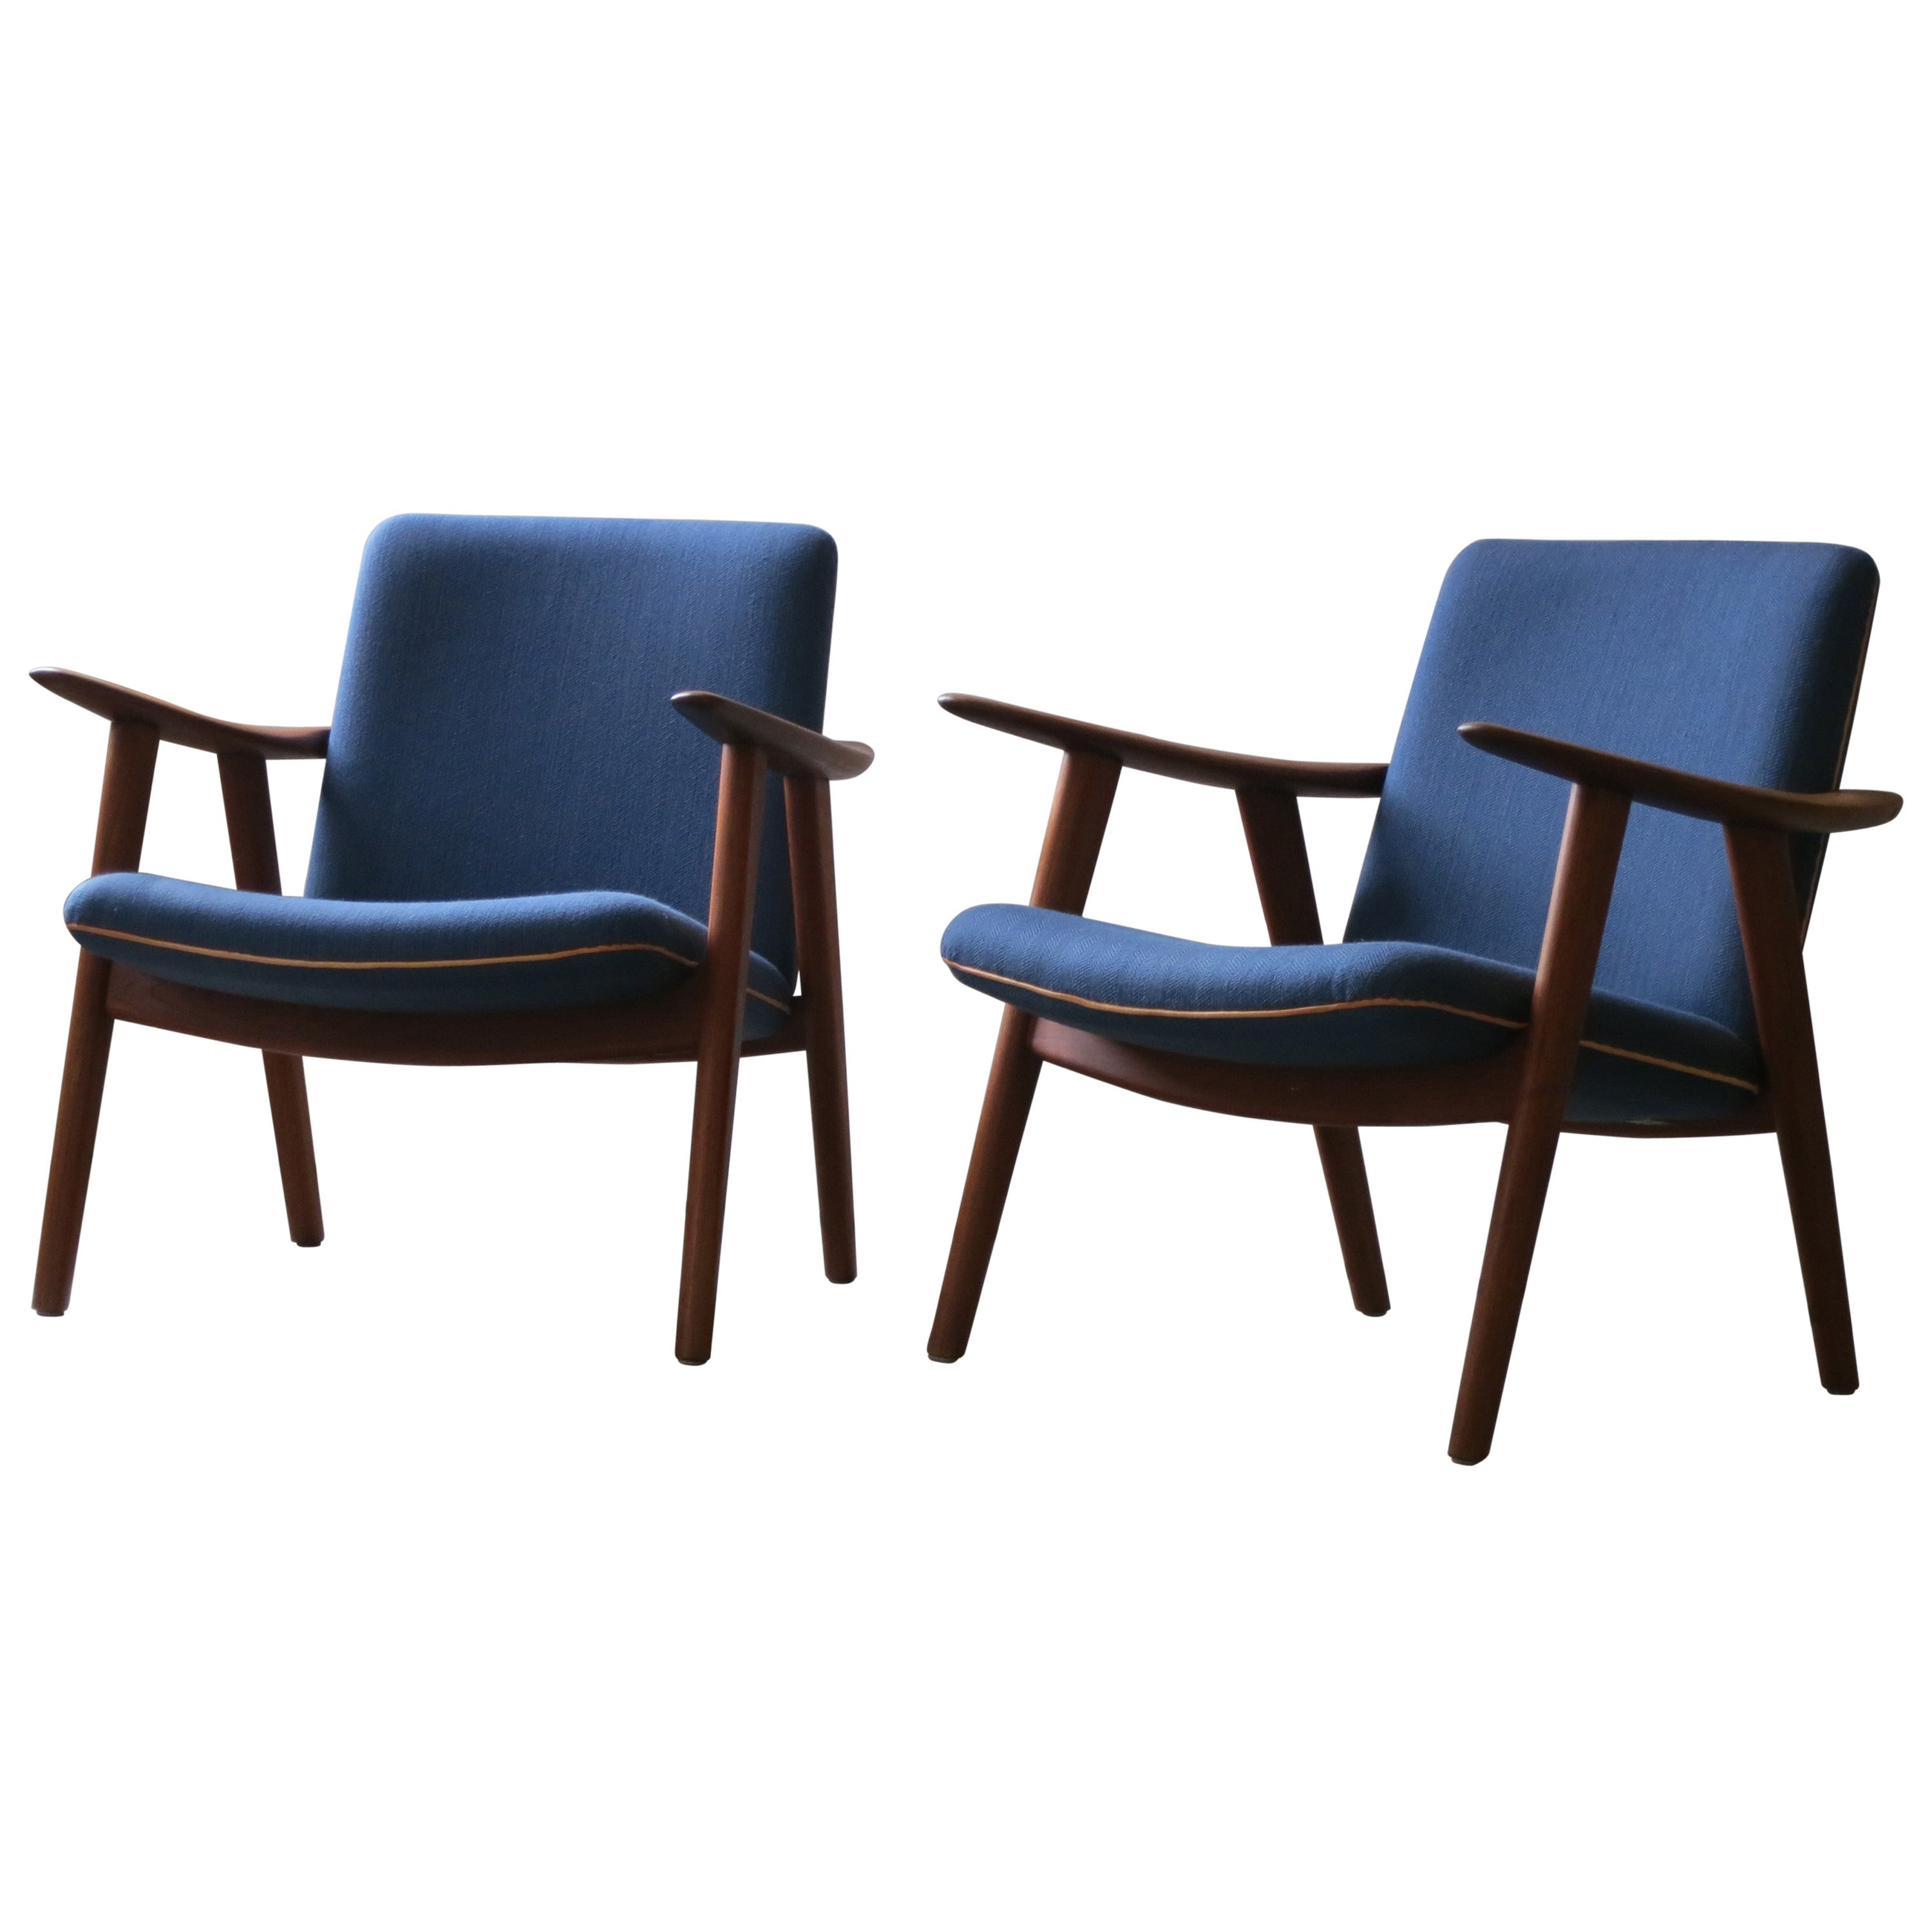 Pair of Teak "Sawbuck" Chairs by Hans Wegner For Sale